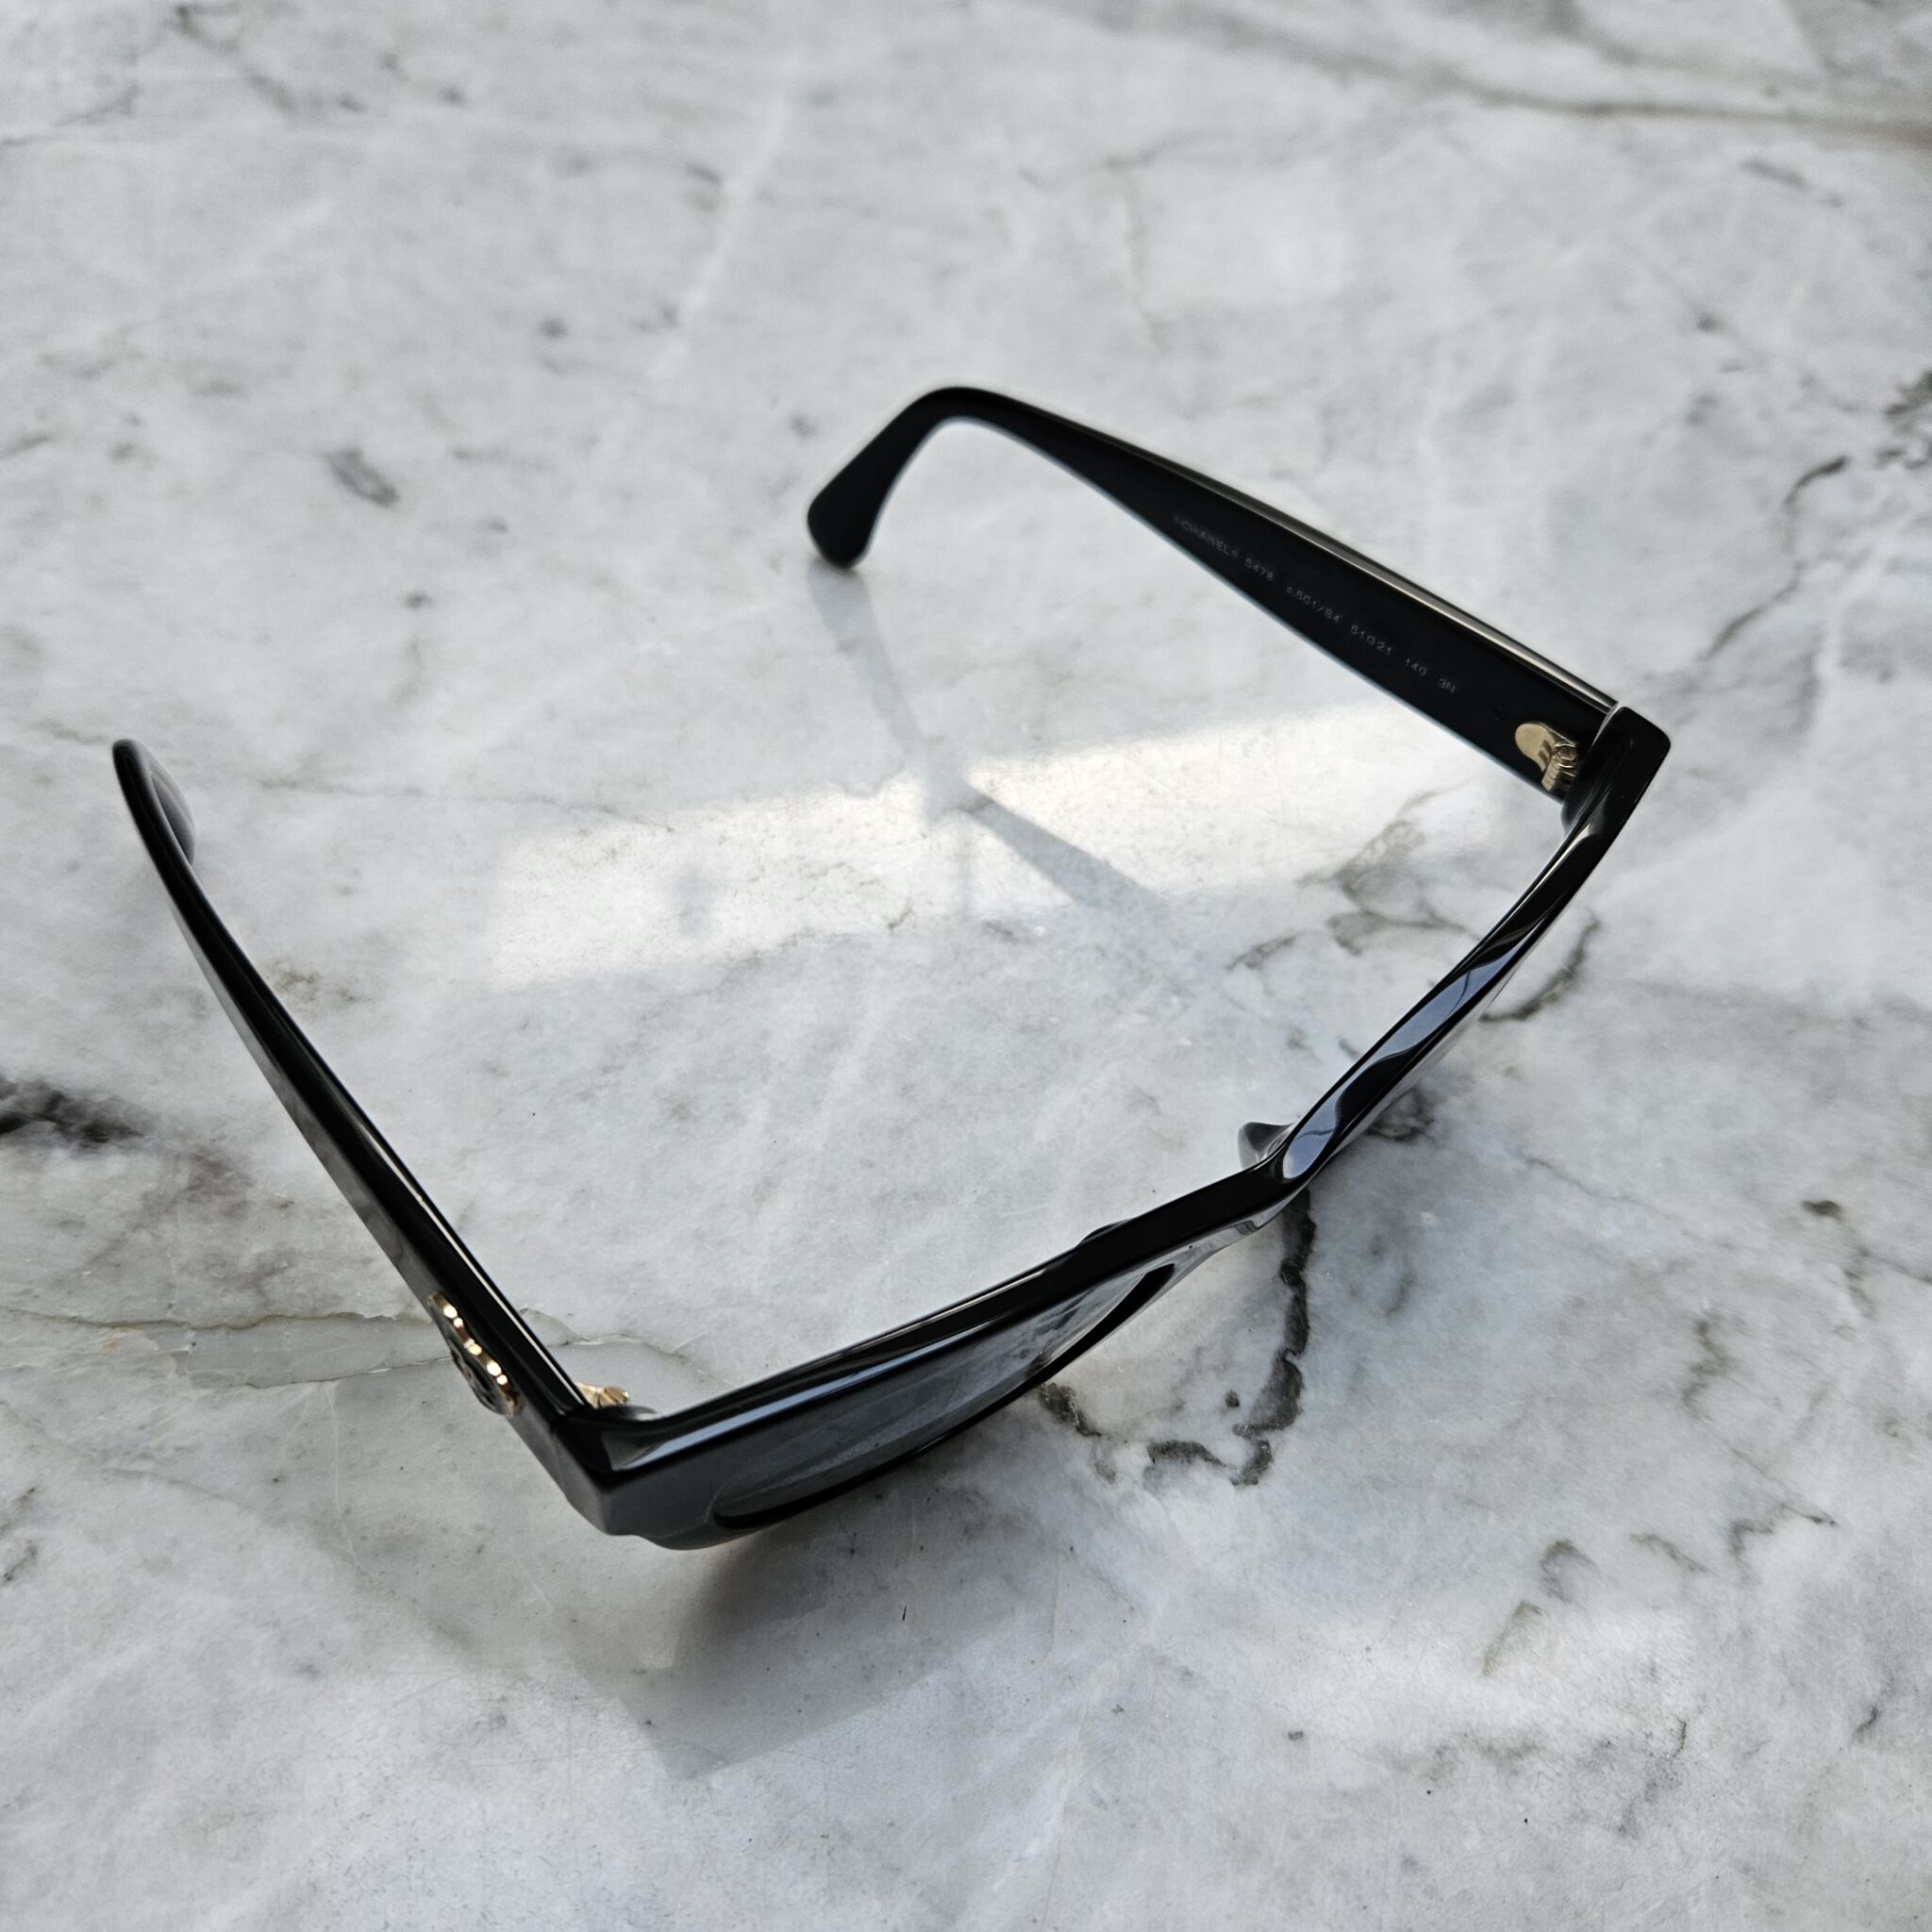 Chanel Sunglasses New Authentic 5478 c 501/S4 Black Gray Square Heart logo  ITALY